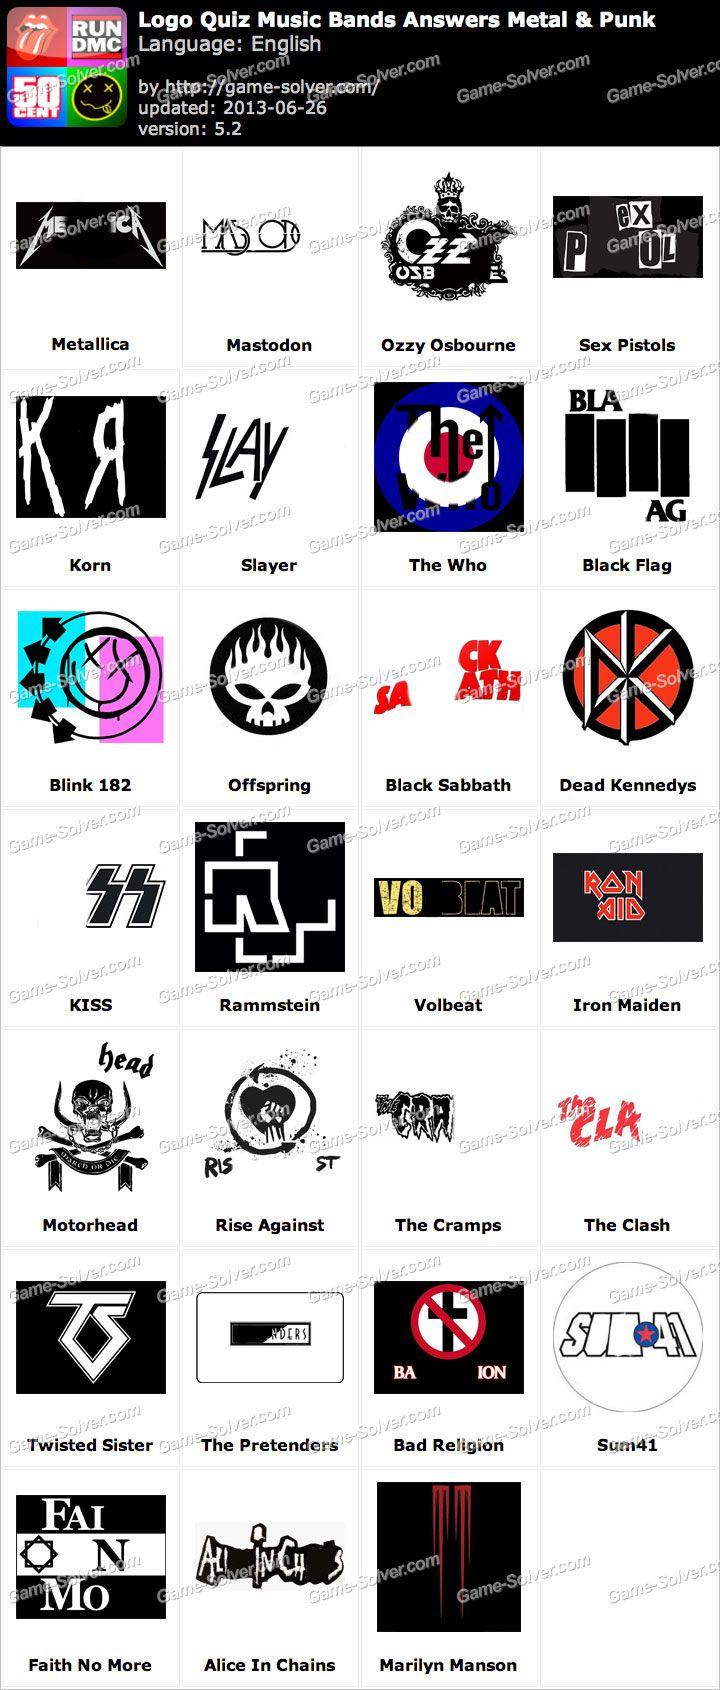 Metal and Punk Band Logo - Logo Quiz Music Bands Answers Metal & Punk - Game Solver